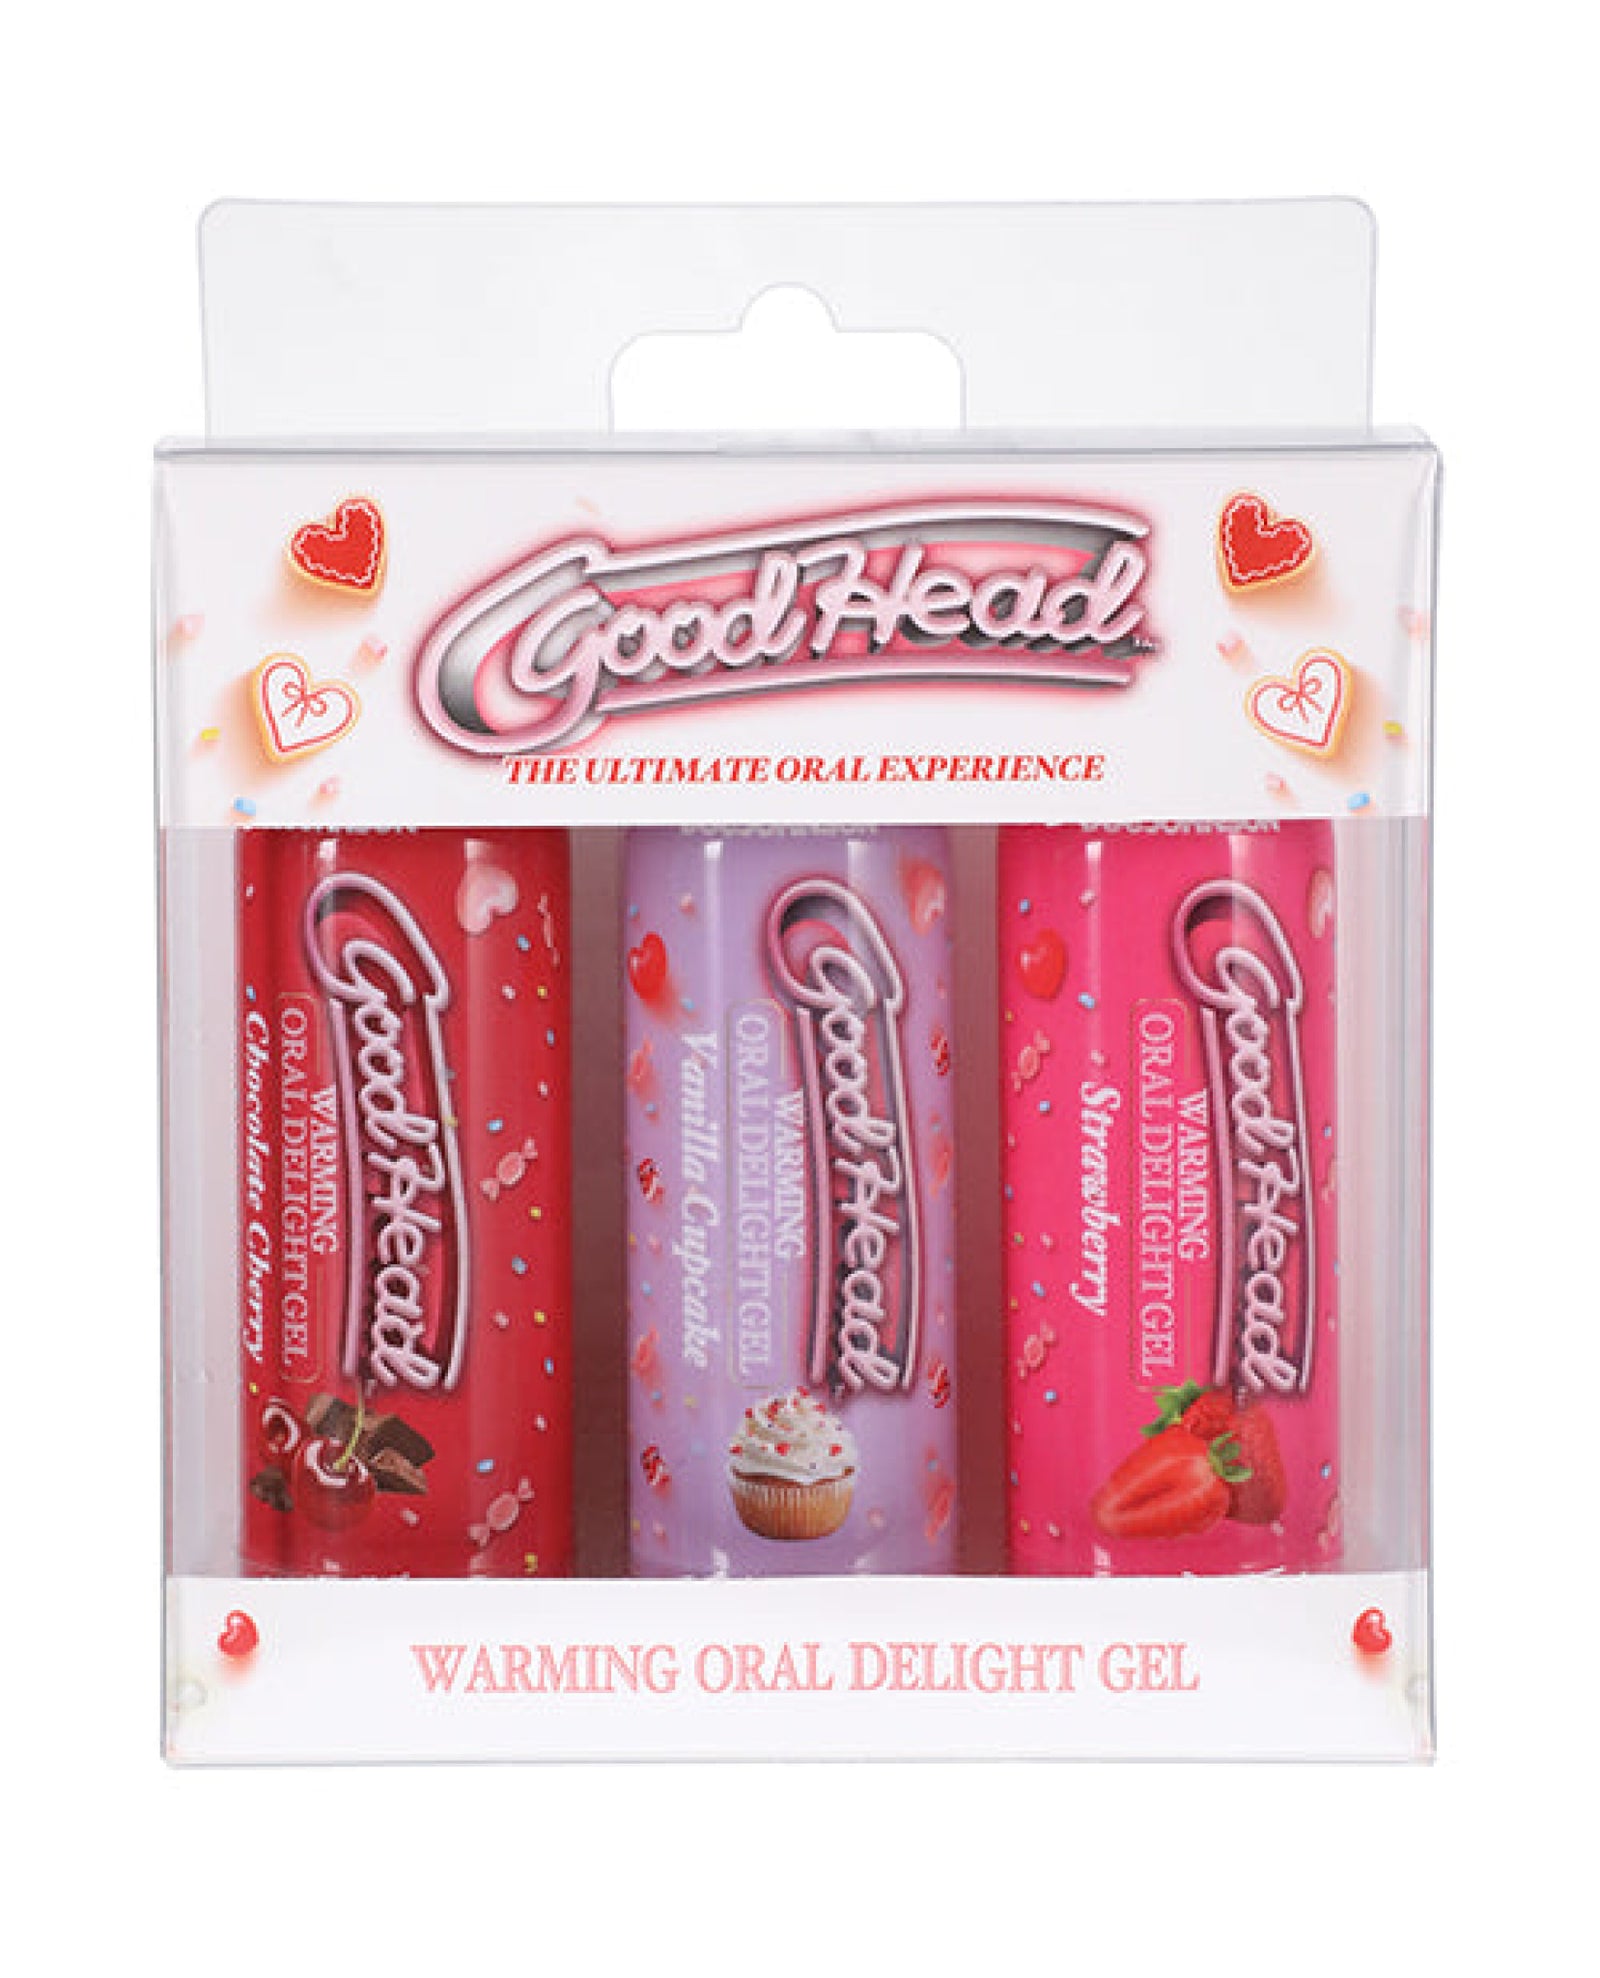 Goodhead Warming Oral Delight Gel Pack - 2 Oz Strawberry-vanilla Cupcake-chocolate Cherry Doc Johnson